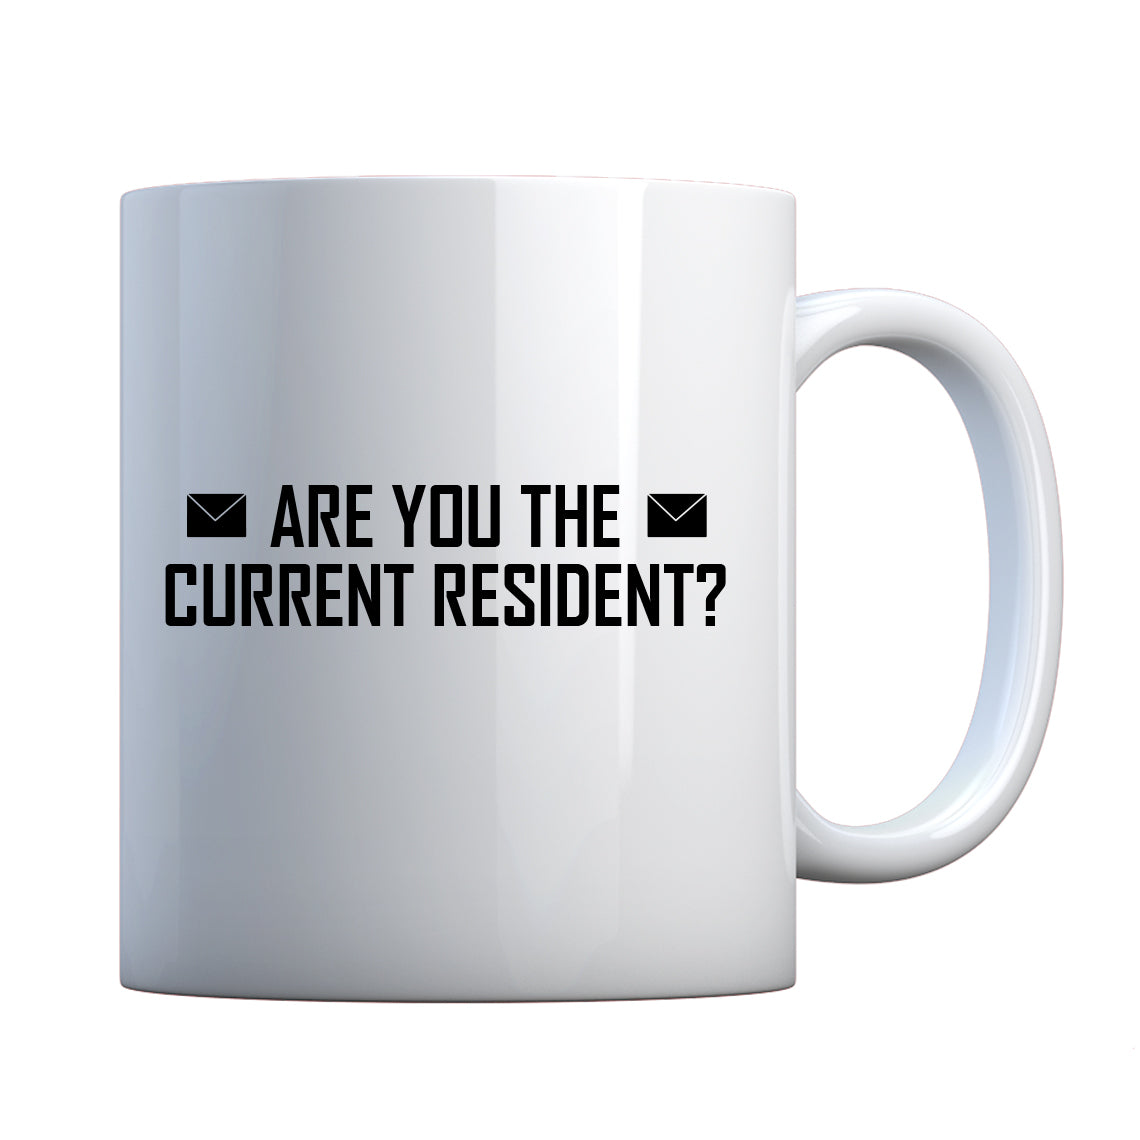 Mug Are you the Current Resident? Ceramic Gift Mug